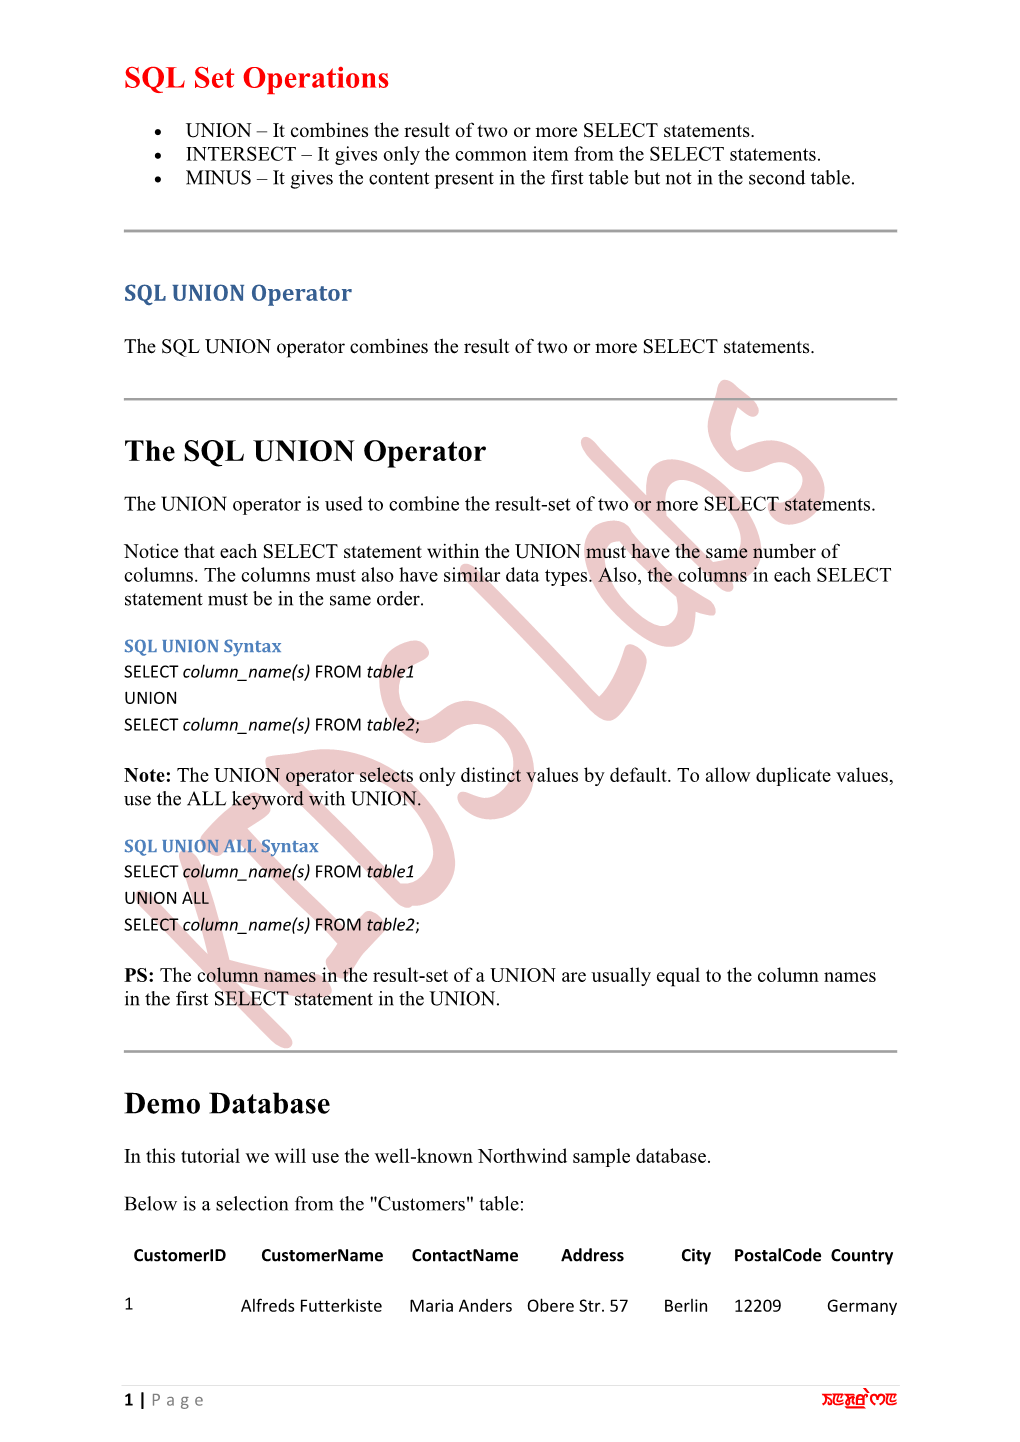 SQL Set Operations the SQL UNION Operator Demo Database